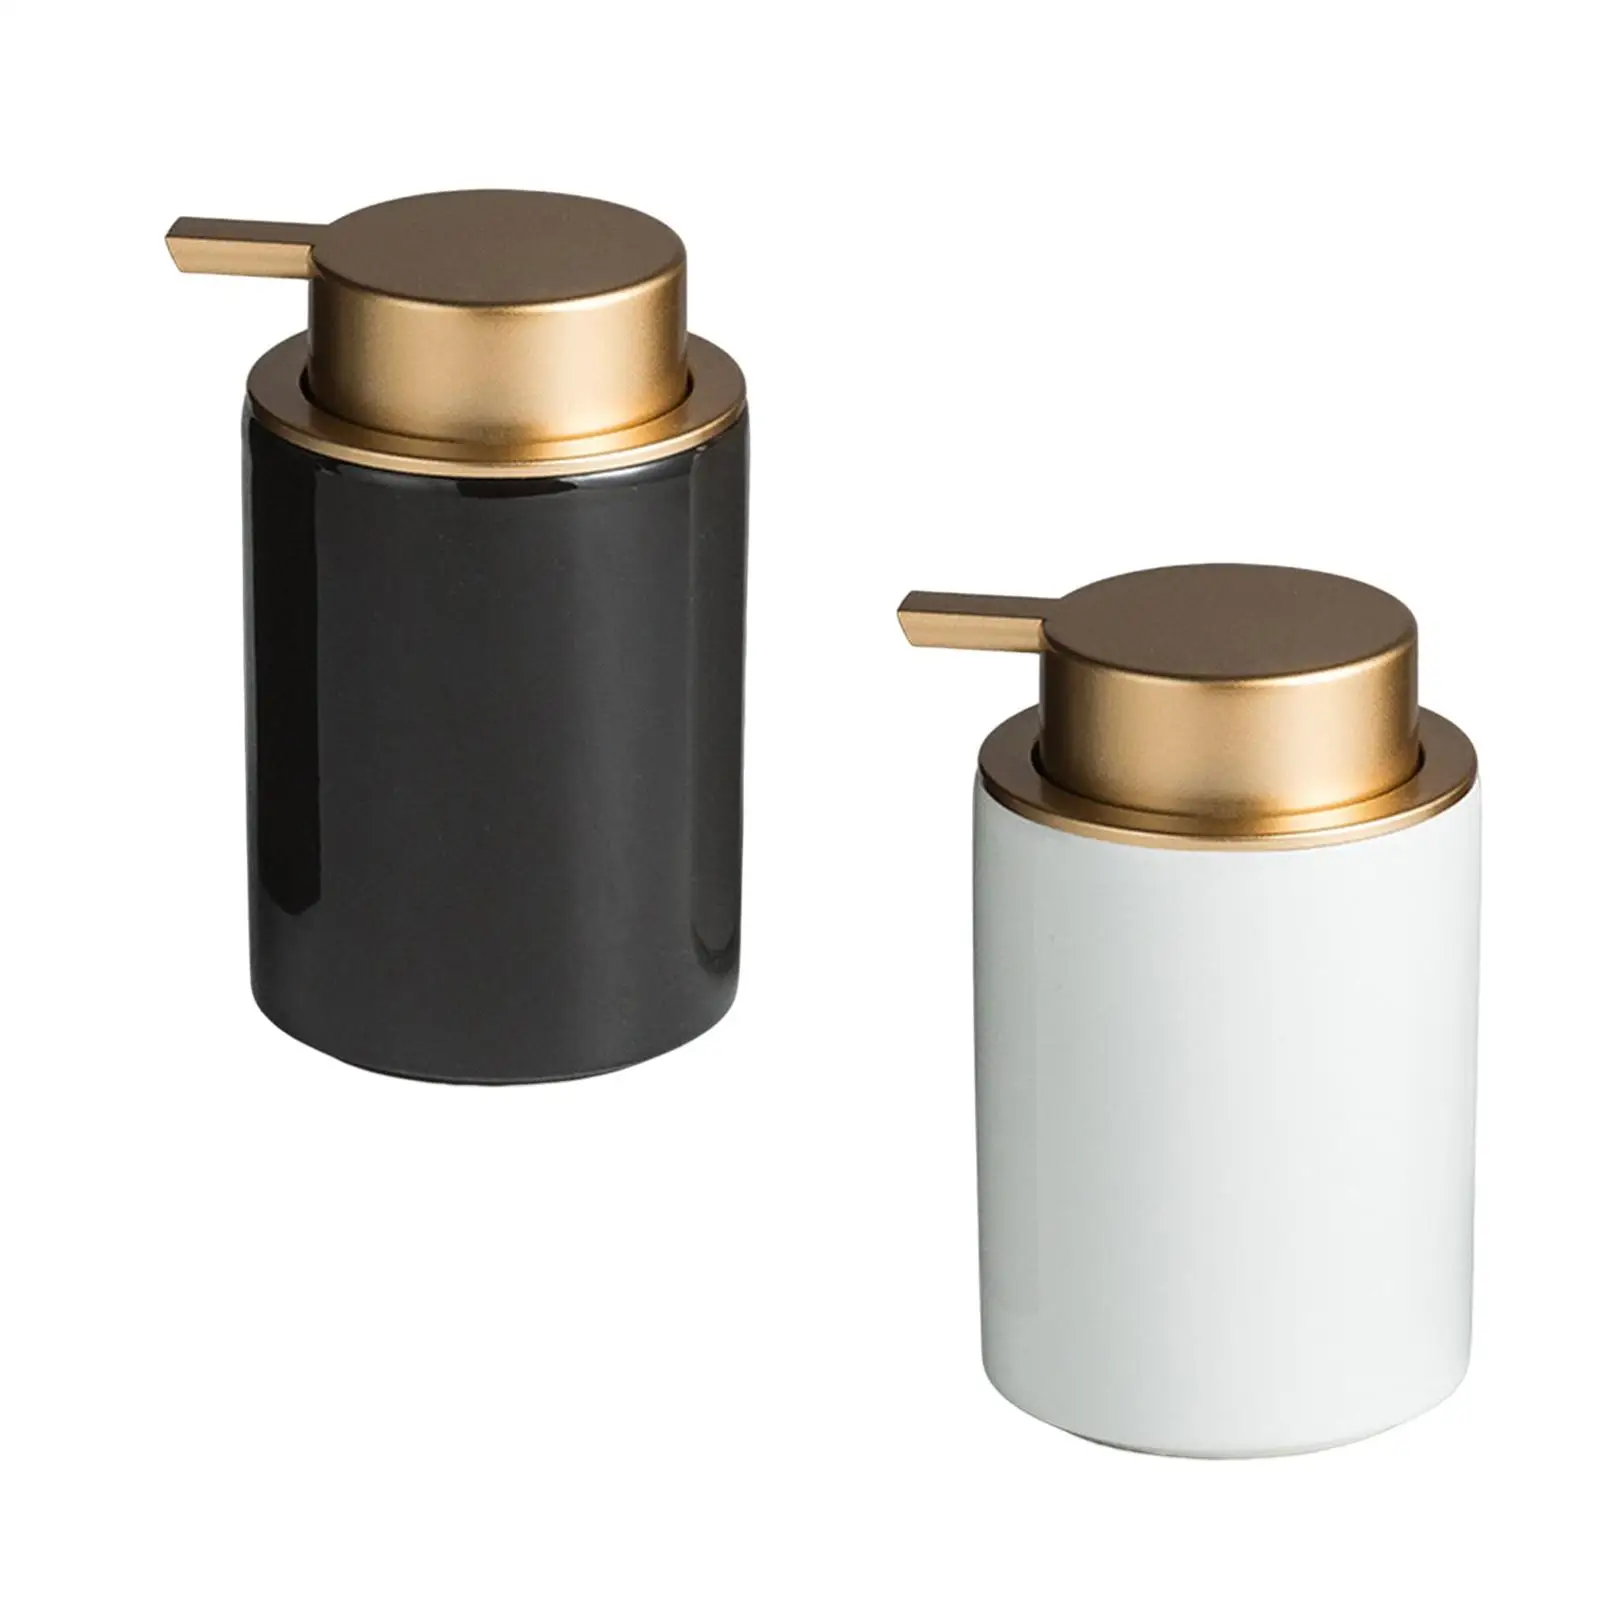 Ceramic Pump Bottle 350ml Refillable Empty Soap Dispenser Lotion Dispenser Container for Wash Room Home Kitchen